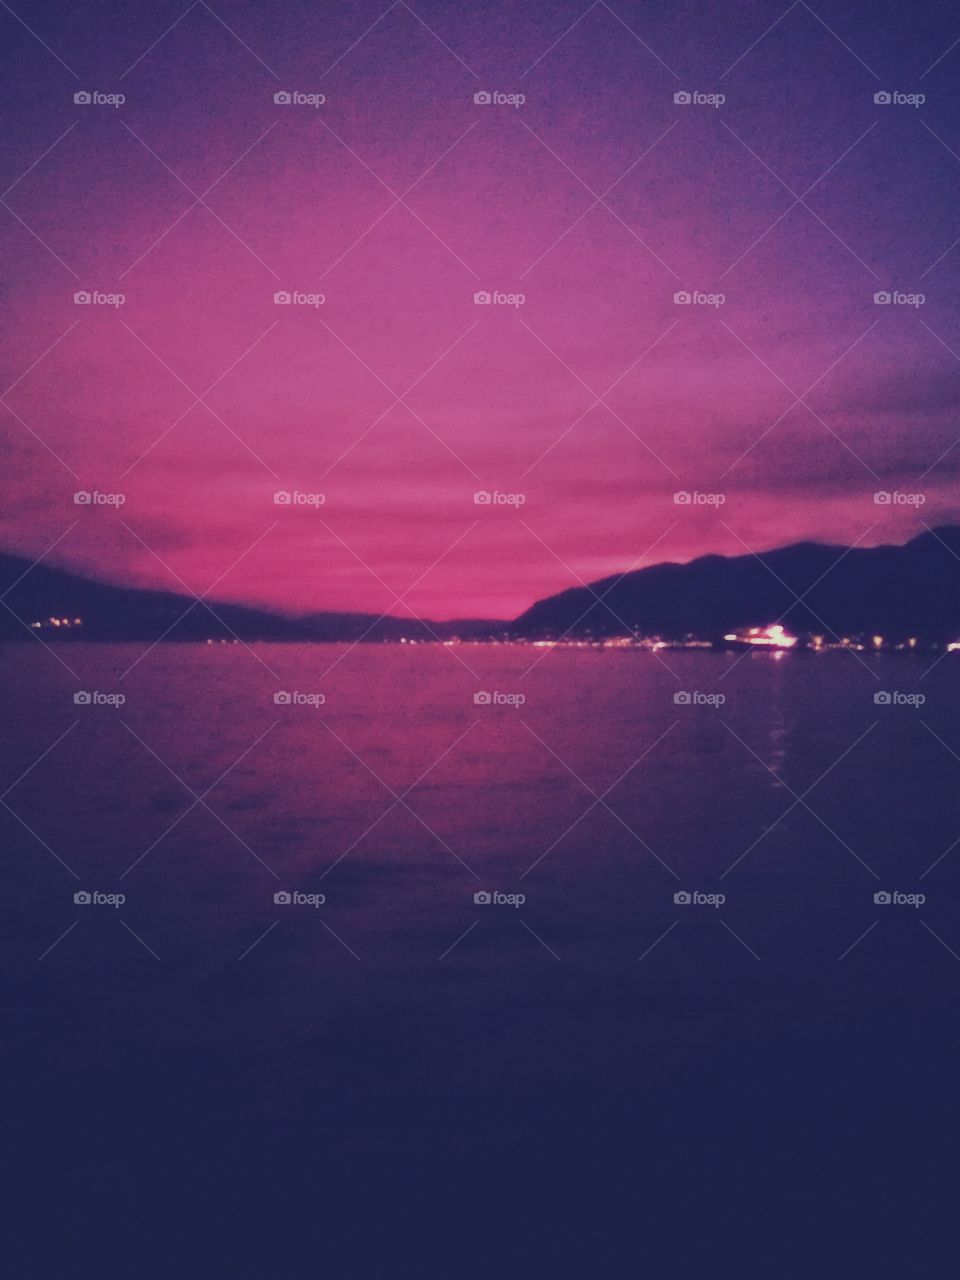 amazing pink sunset, sea, city and mountains